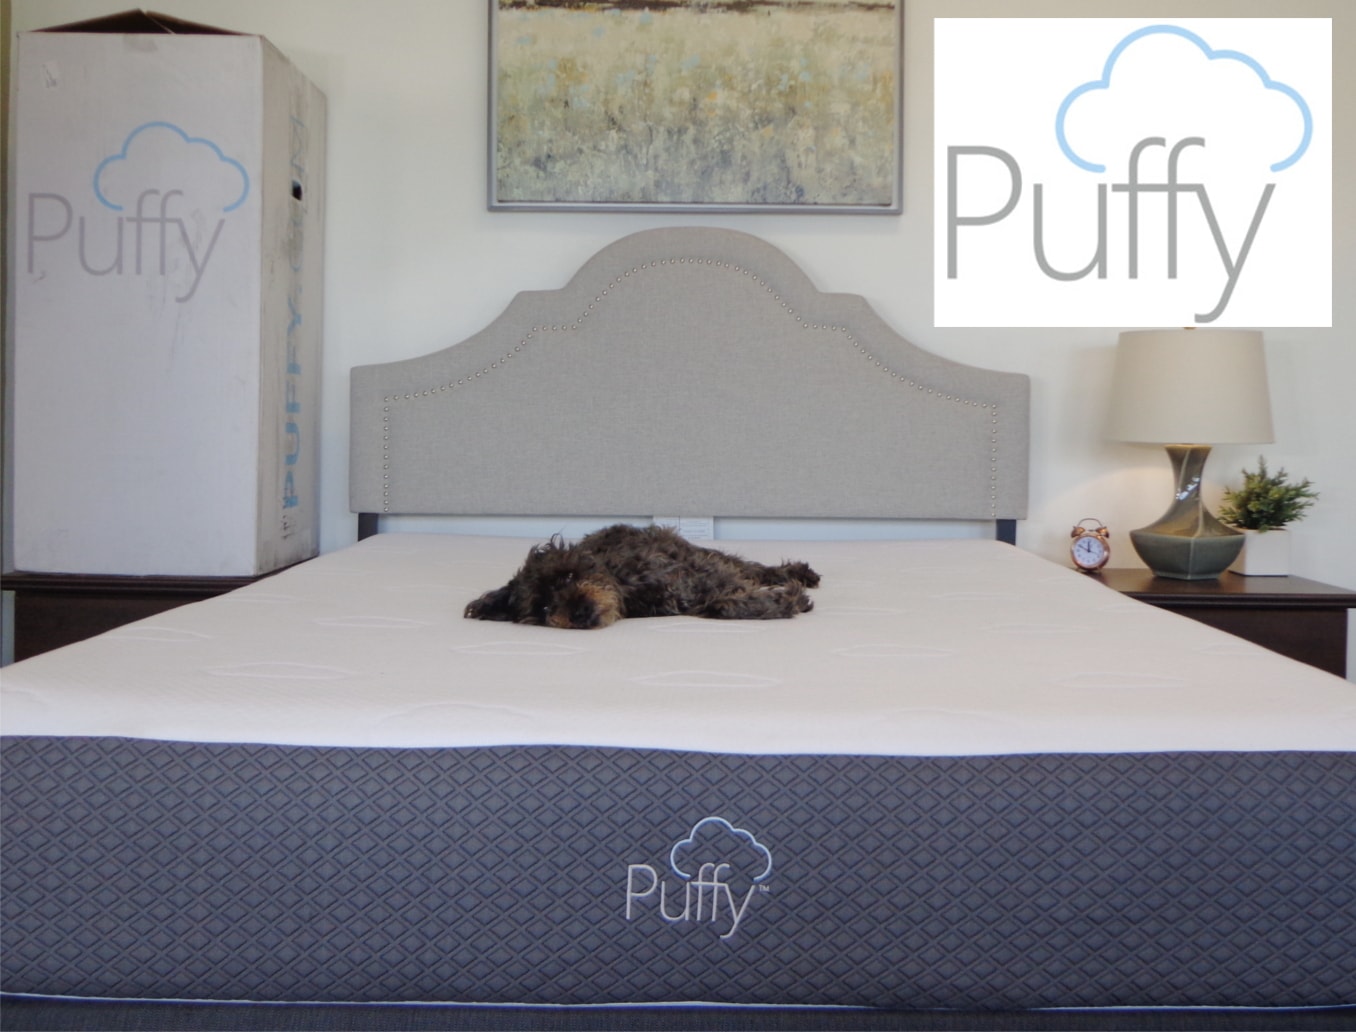 casper vs puffy mattress comparison